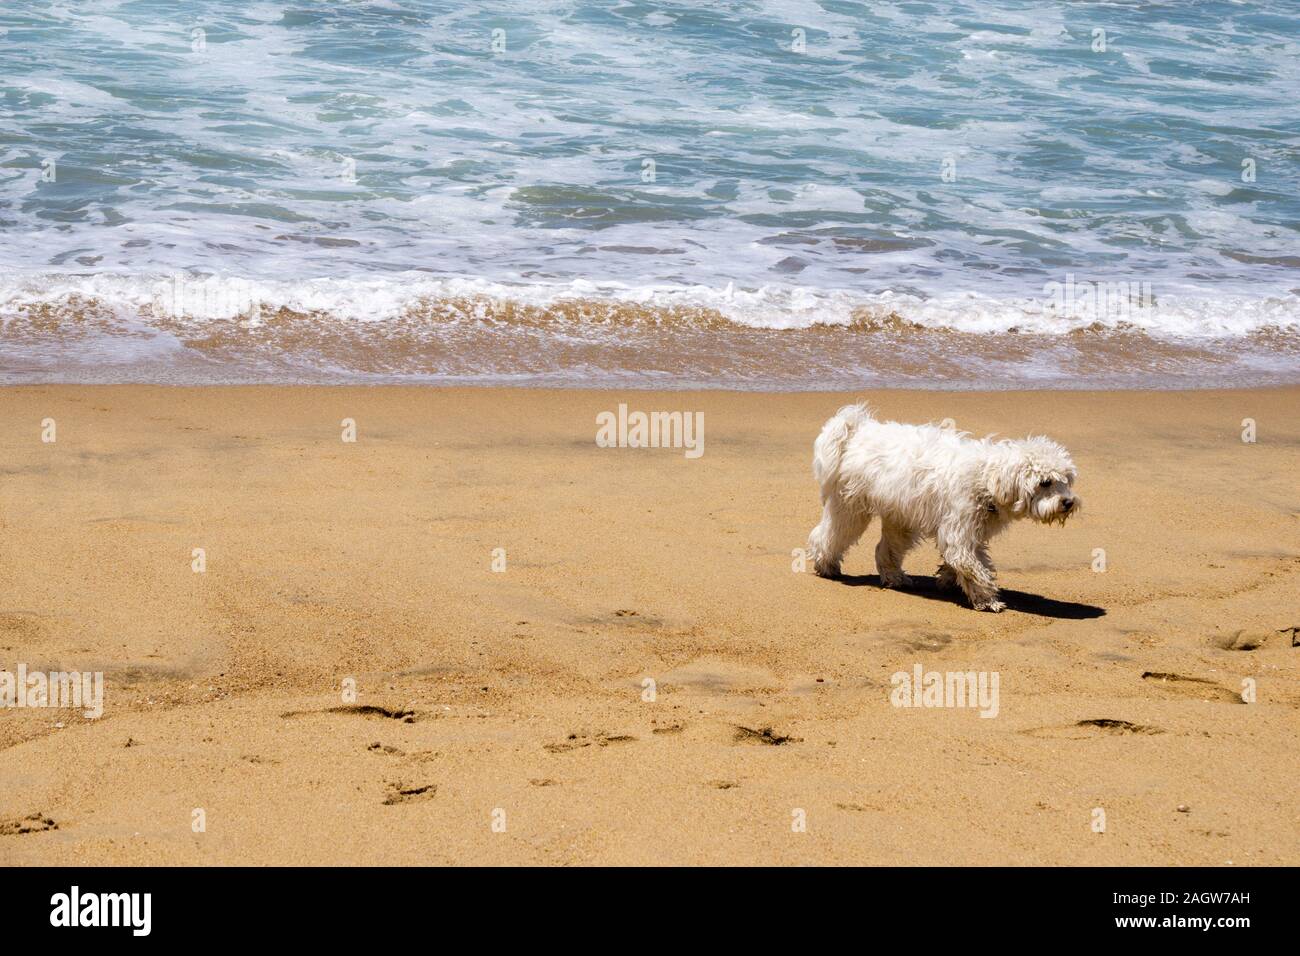 Dog walking peacefully on the beach sand Stock Photo